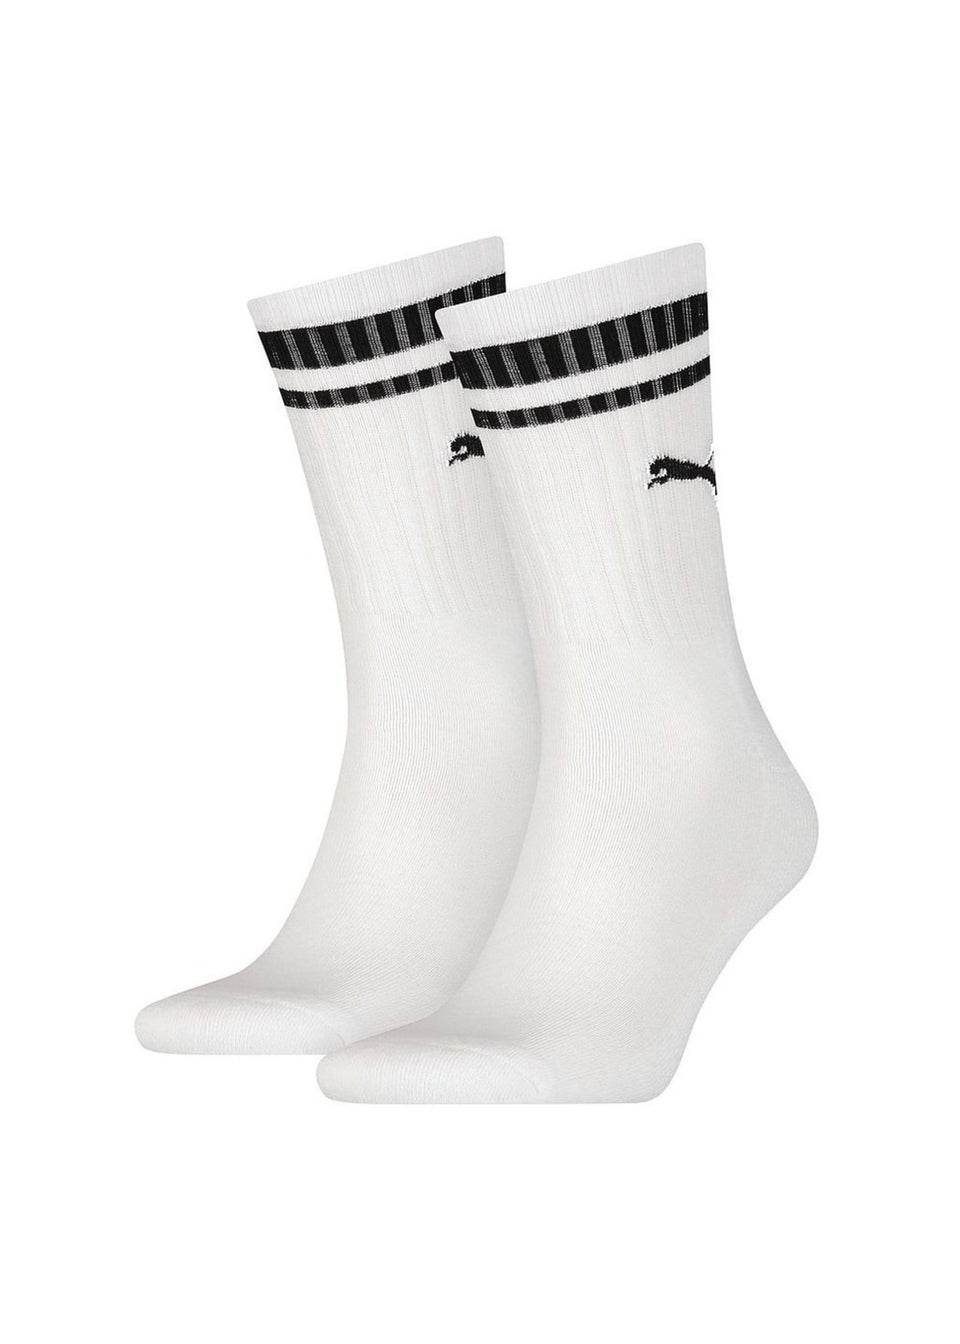 Puma White/Black Heritage Stripe Crew Socks (Pack of 2)